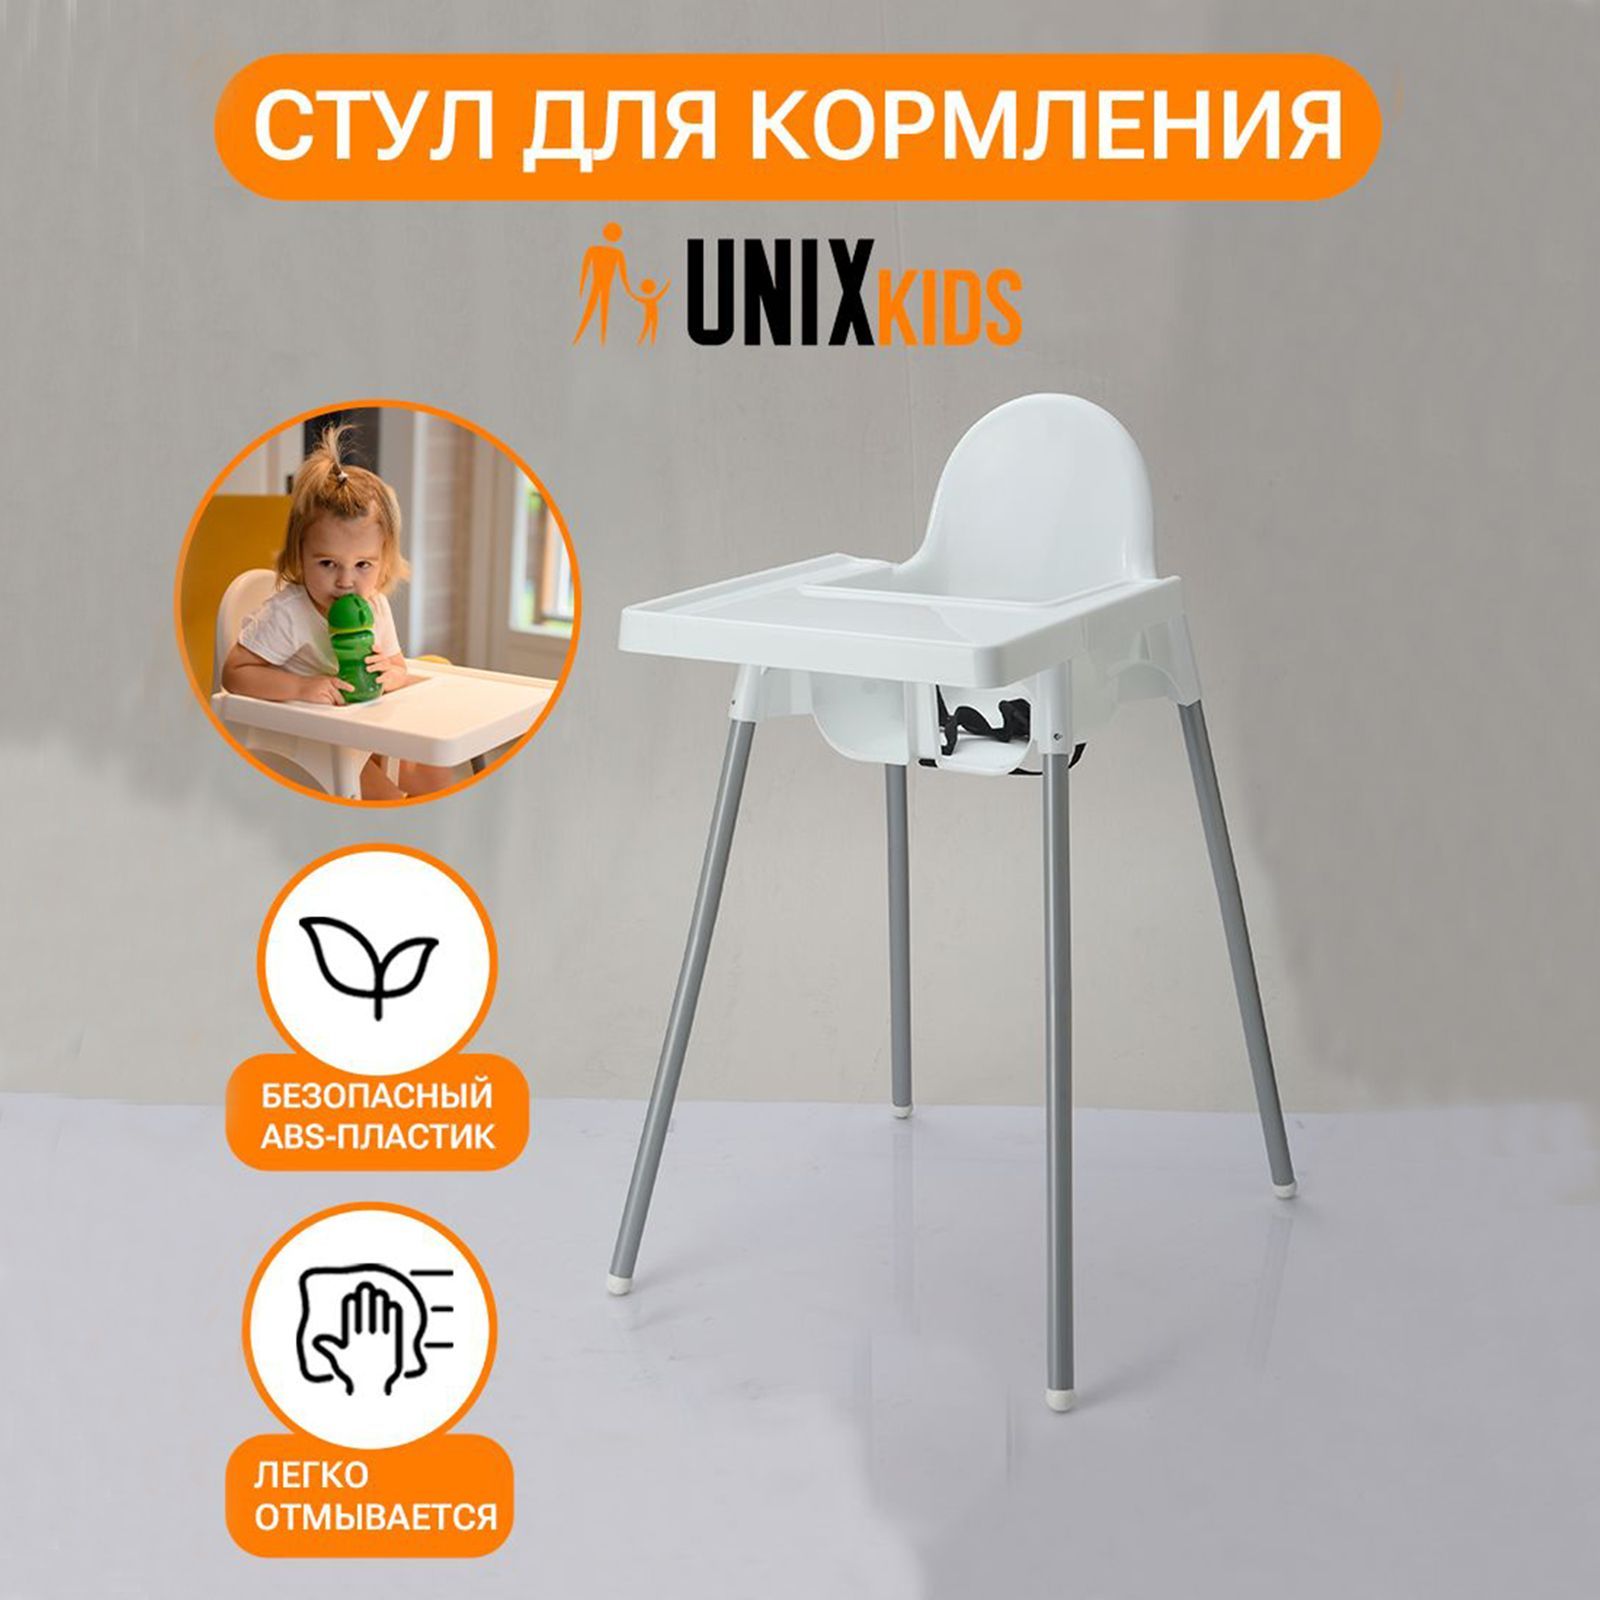 Стульчик для кормления UNIX Kids Fixed White - аналог ИКЕА, со столиком стульчик для кормления unix kids fixed white аналог икеа со столиком